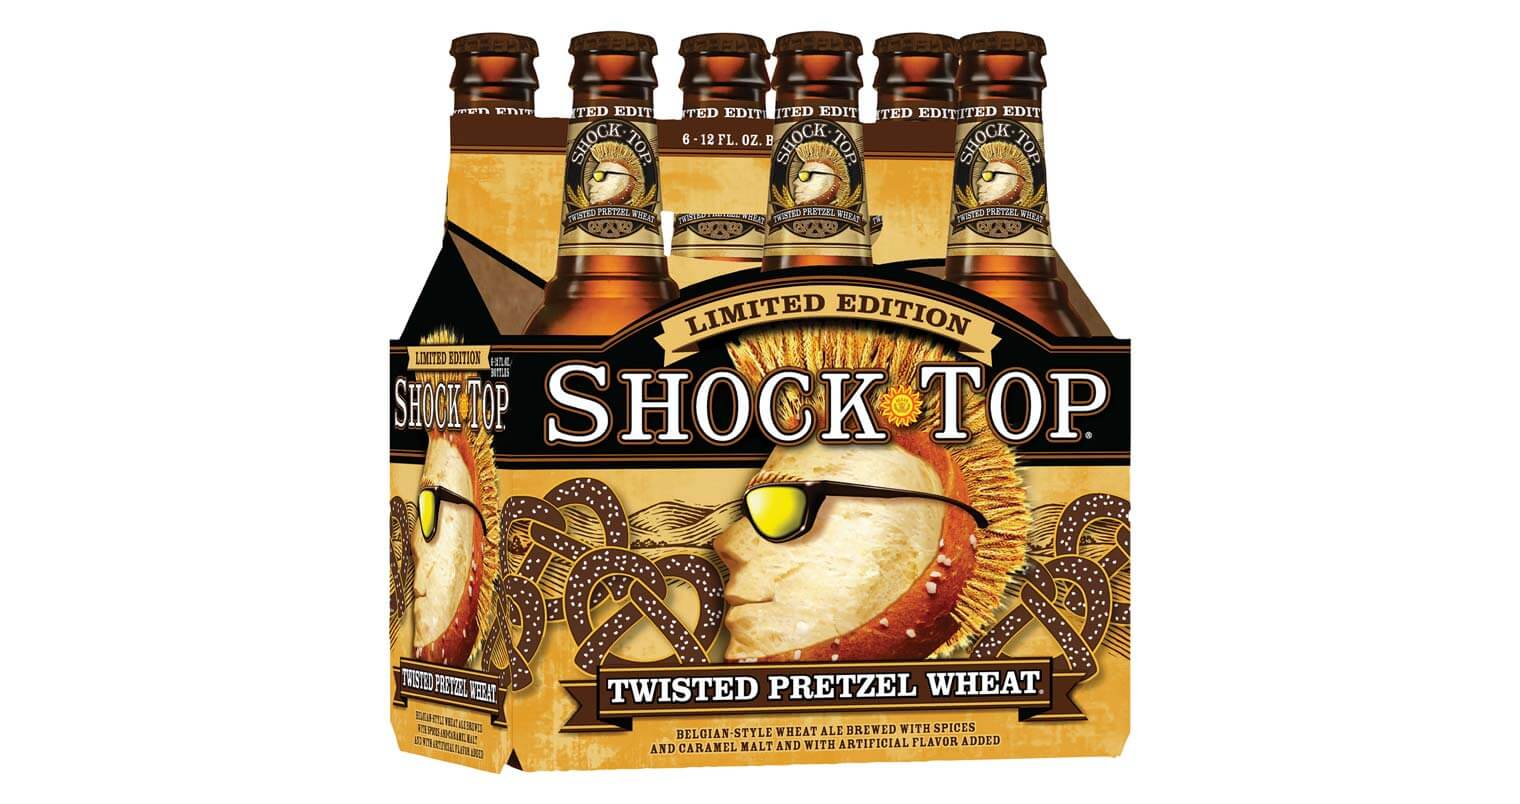 Shock Top Brings Back Twisted Pretzel Wheat